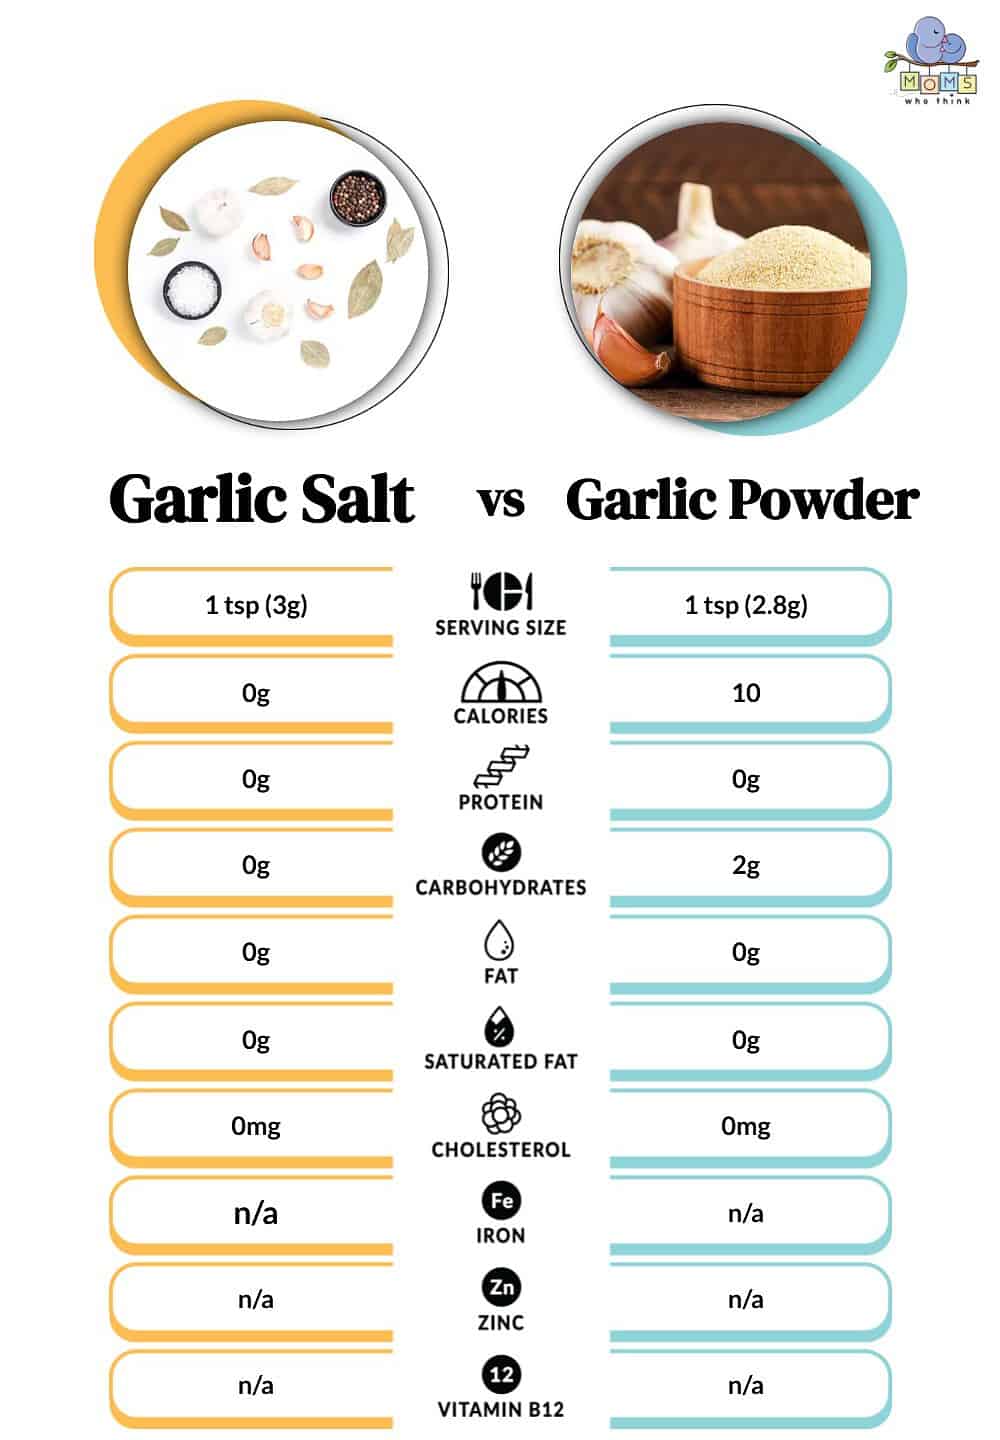 Garlic Salt vs Garlic Powder Nutritional Facts